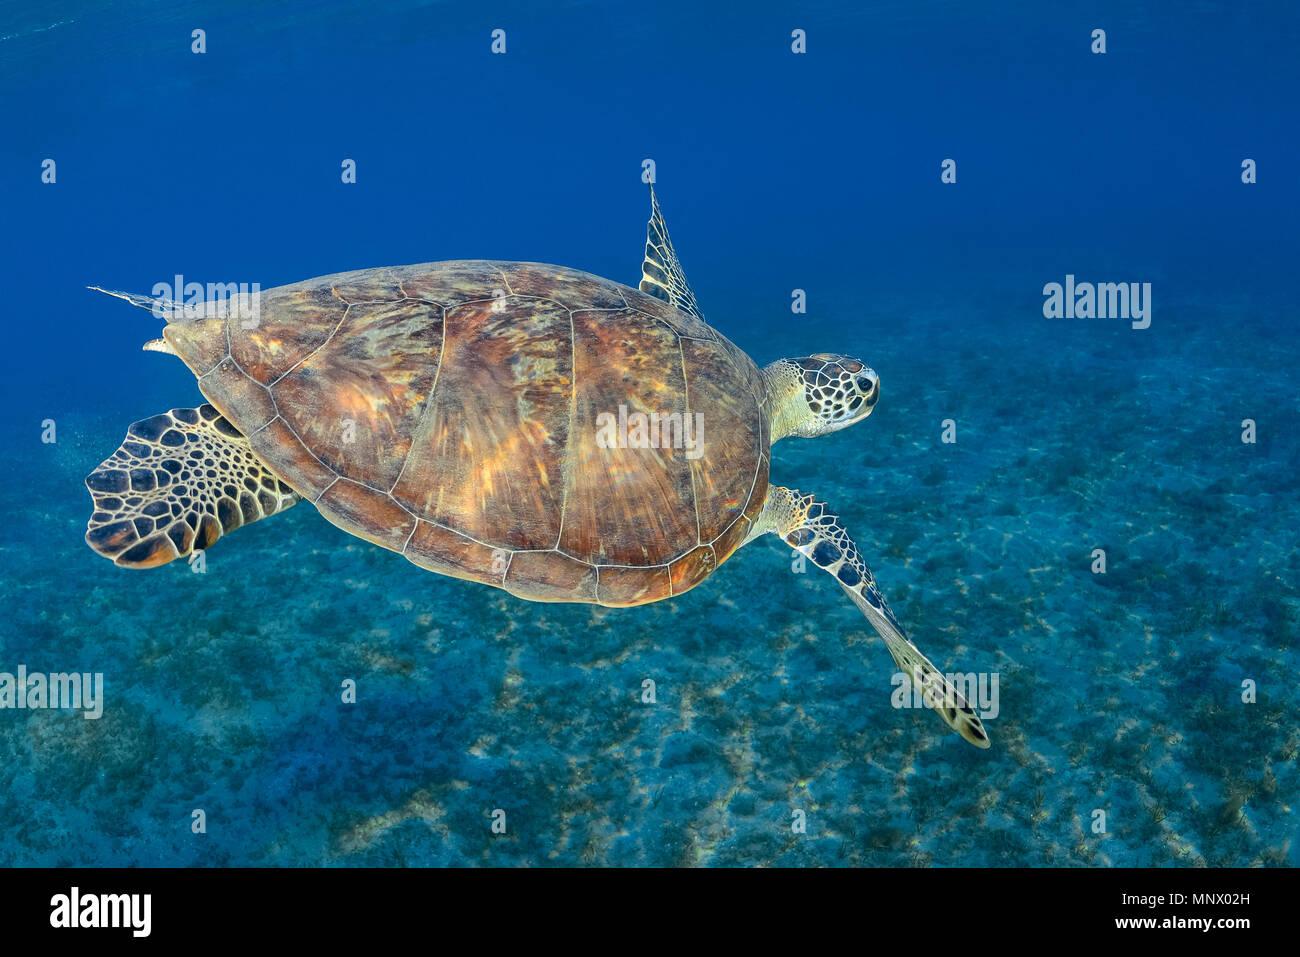 green sea turtle, Chelonia mydas, endangered species, Wadi Gimal, Marsa Alam, Egypt, Red Sea, Indian Ocean Stock Photo